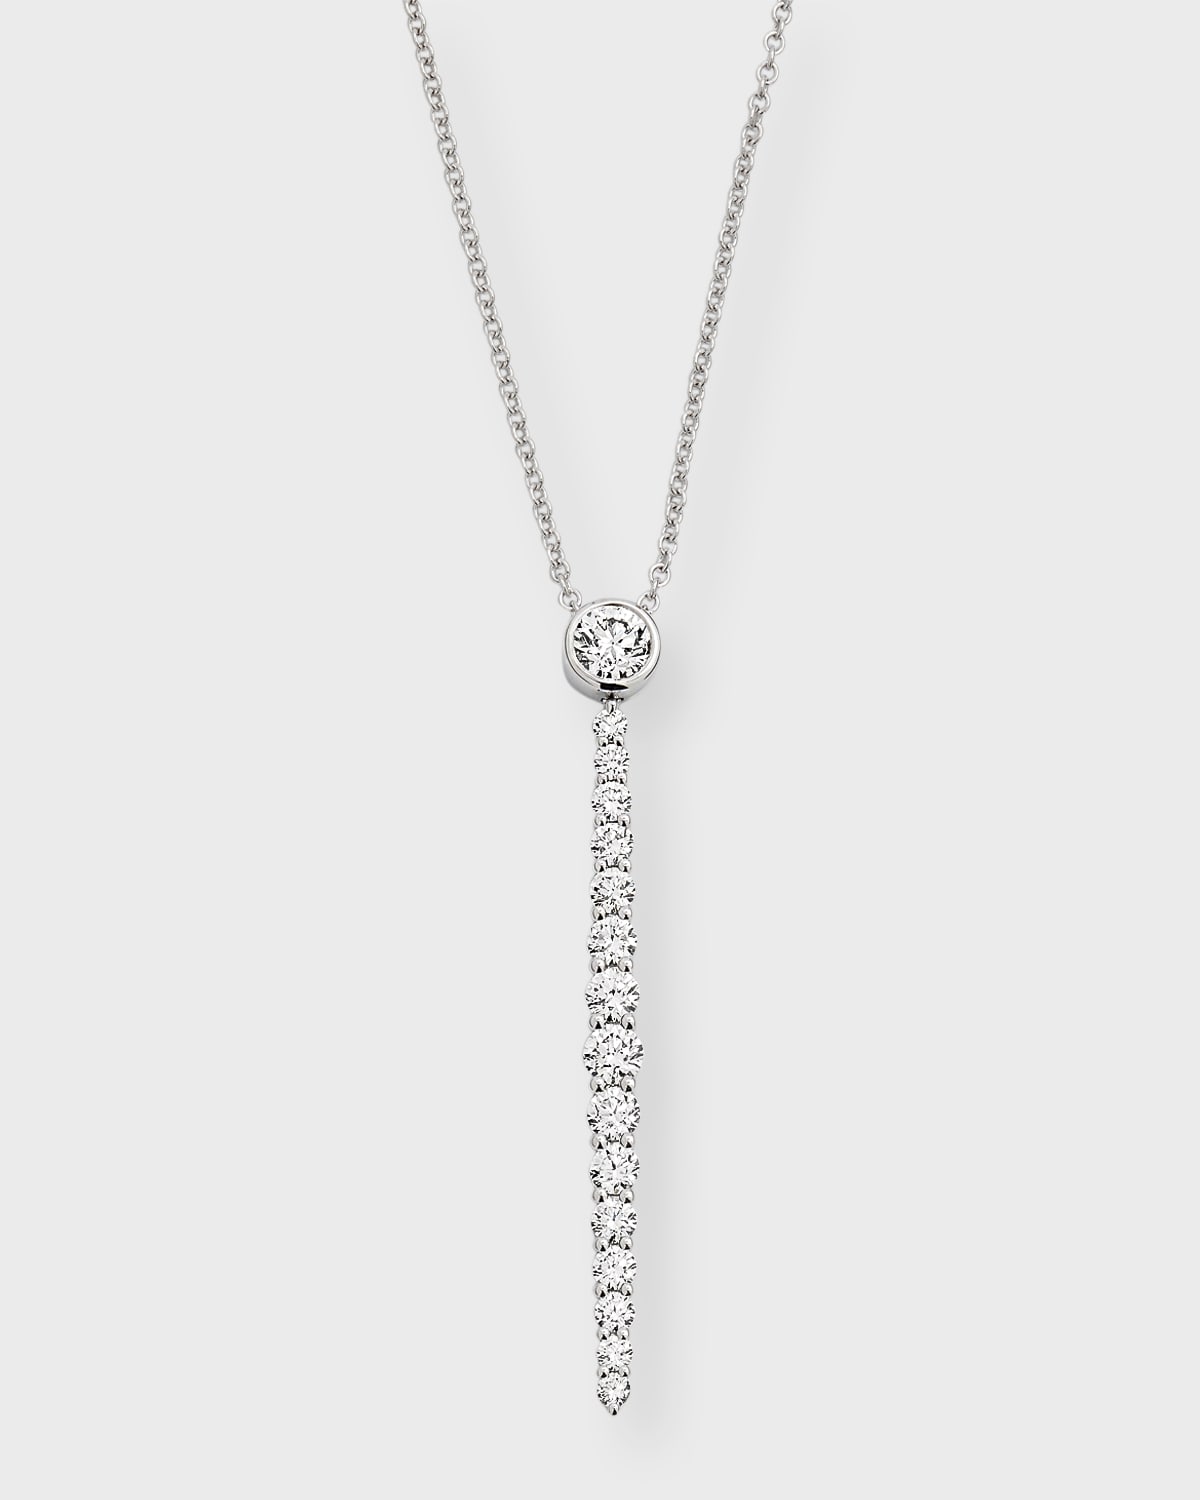 Neiman Marcus Diamonds 18k White Gold Diamond Pendant Necklace